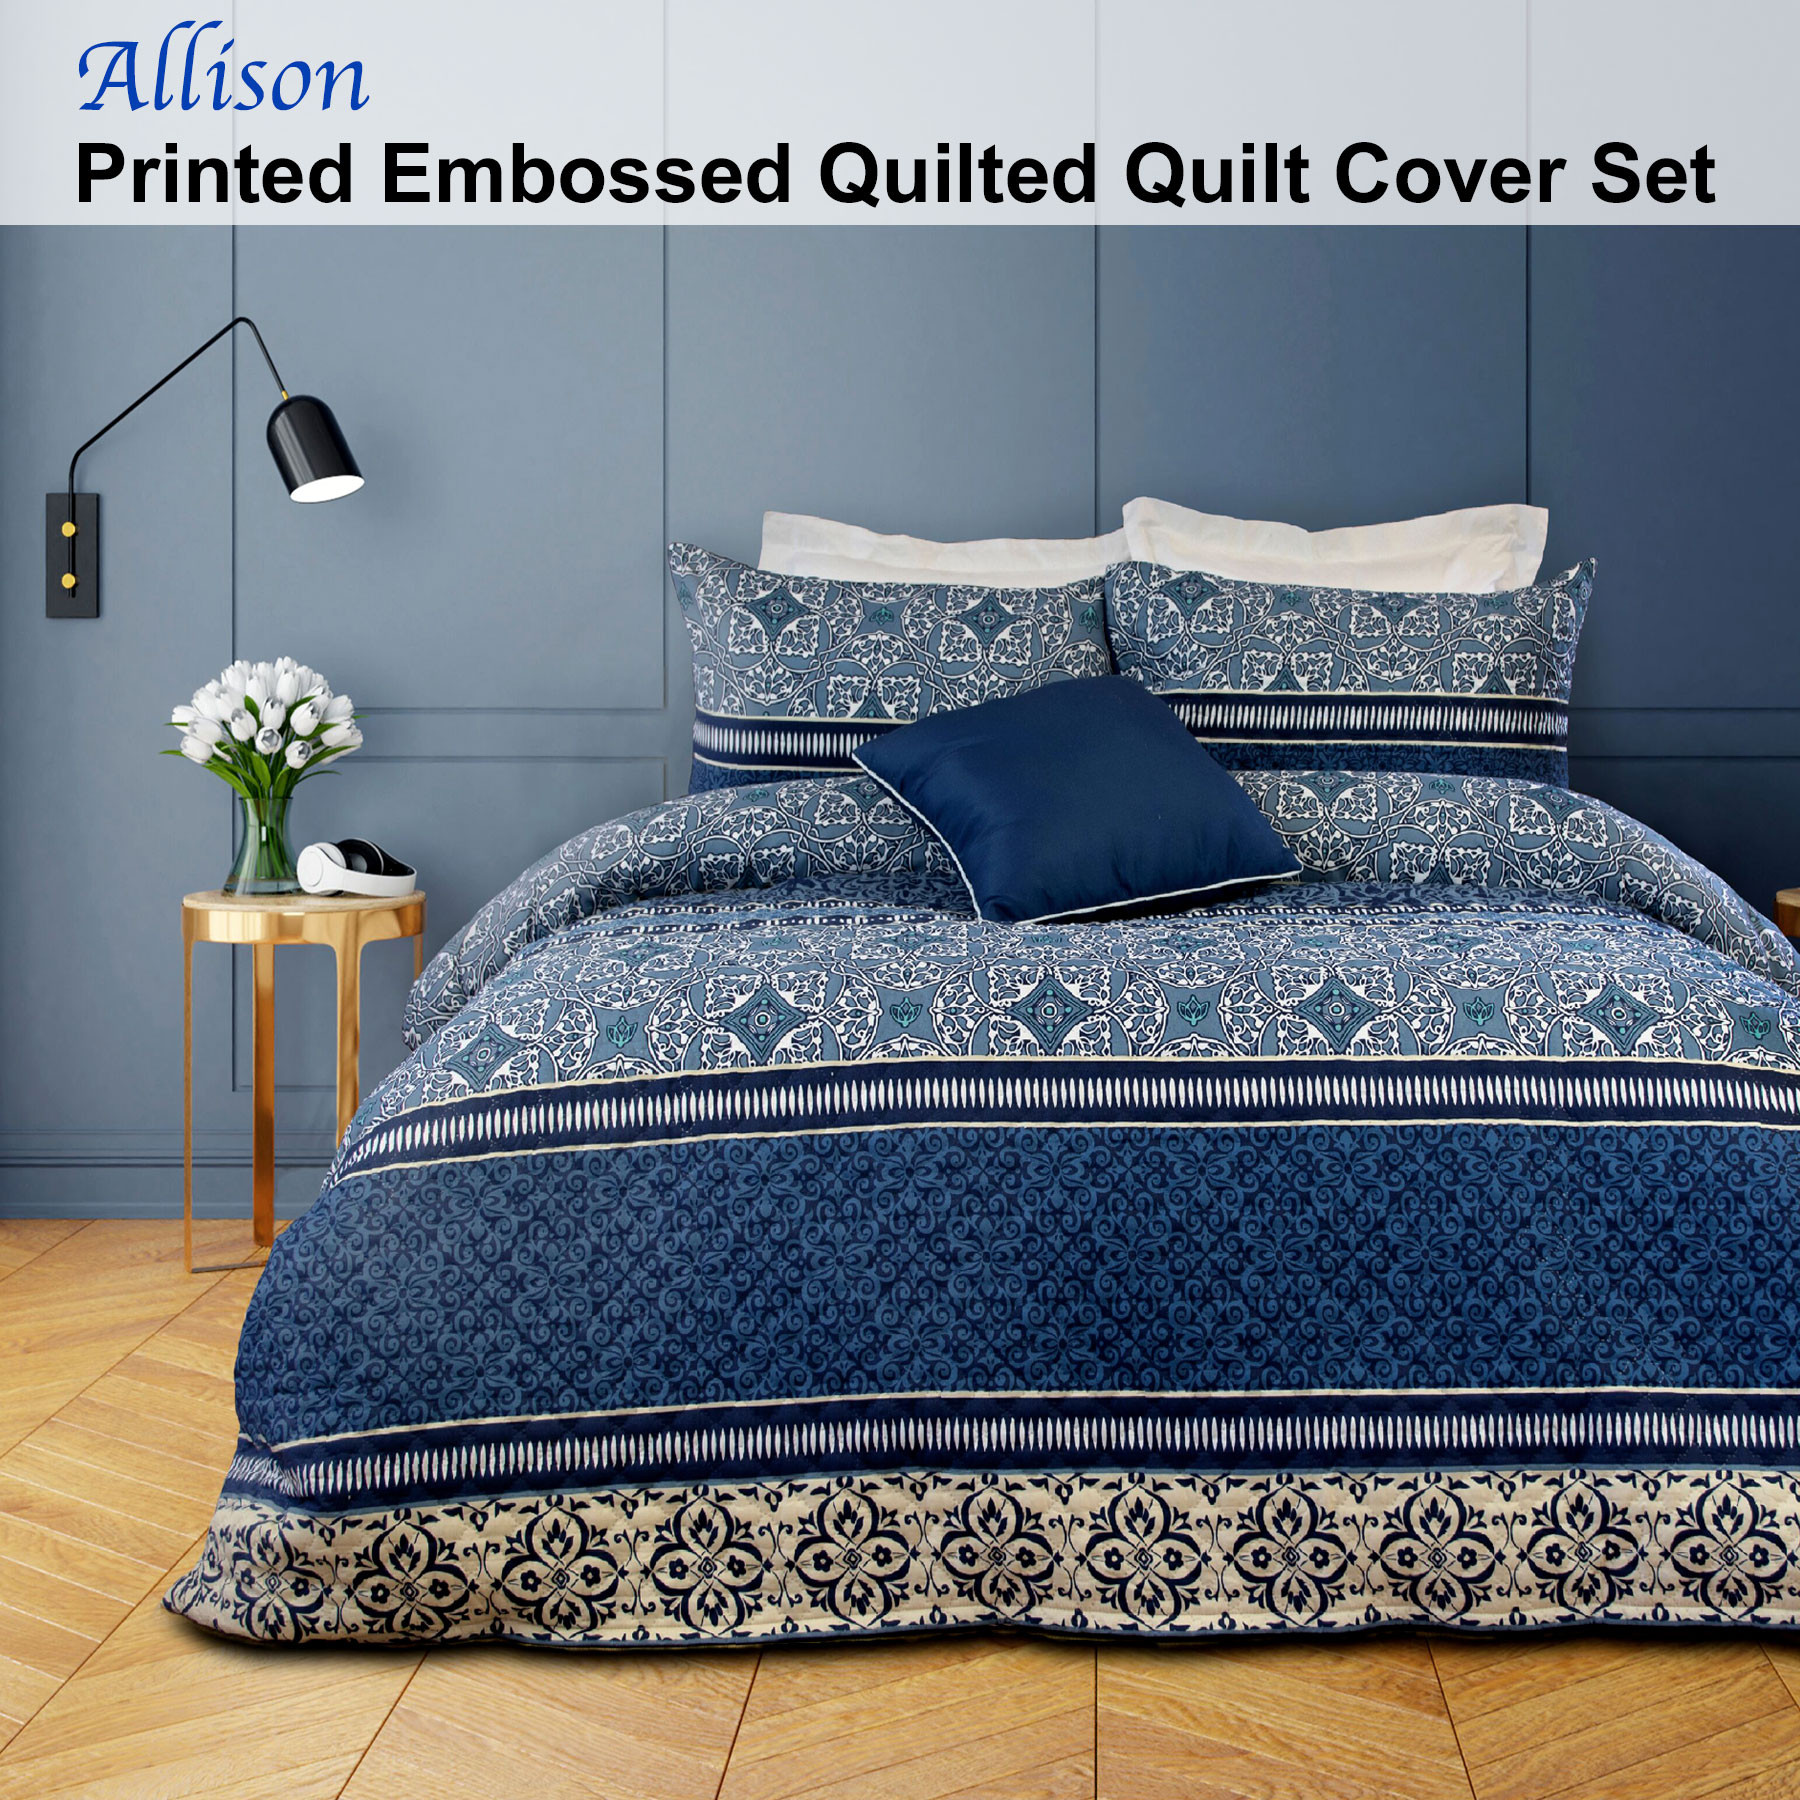 ardor quilted quilt cover set allison1